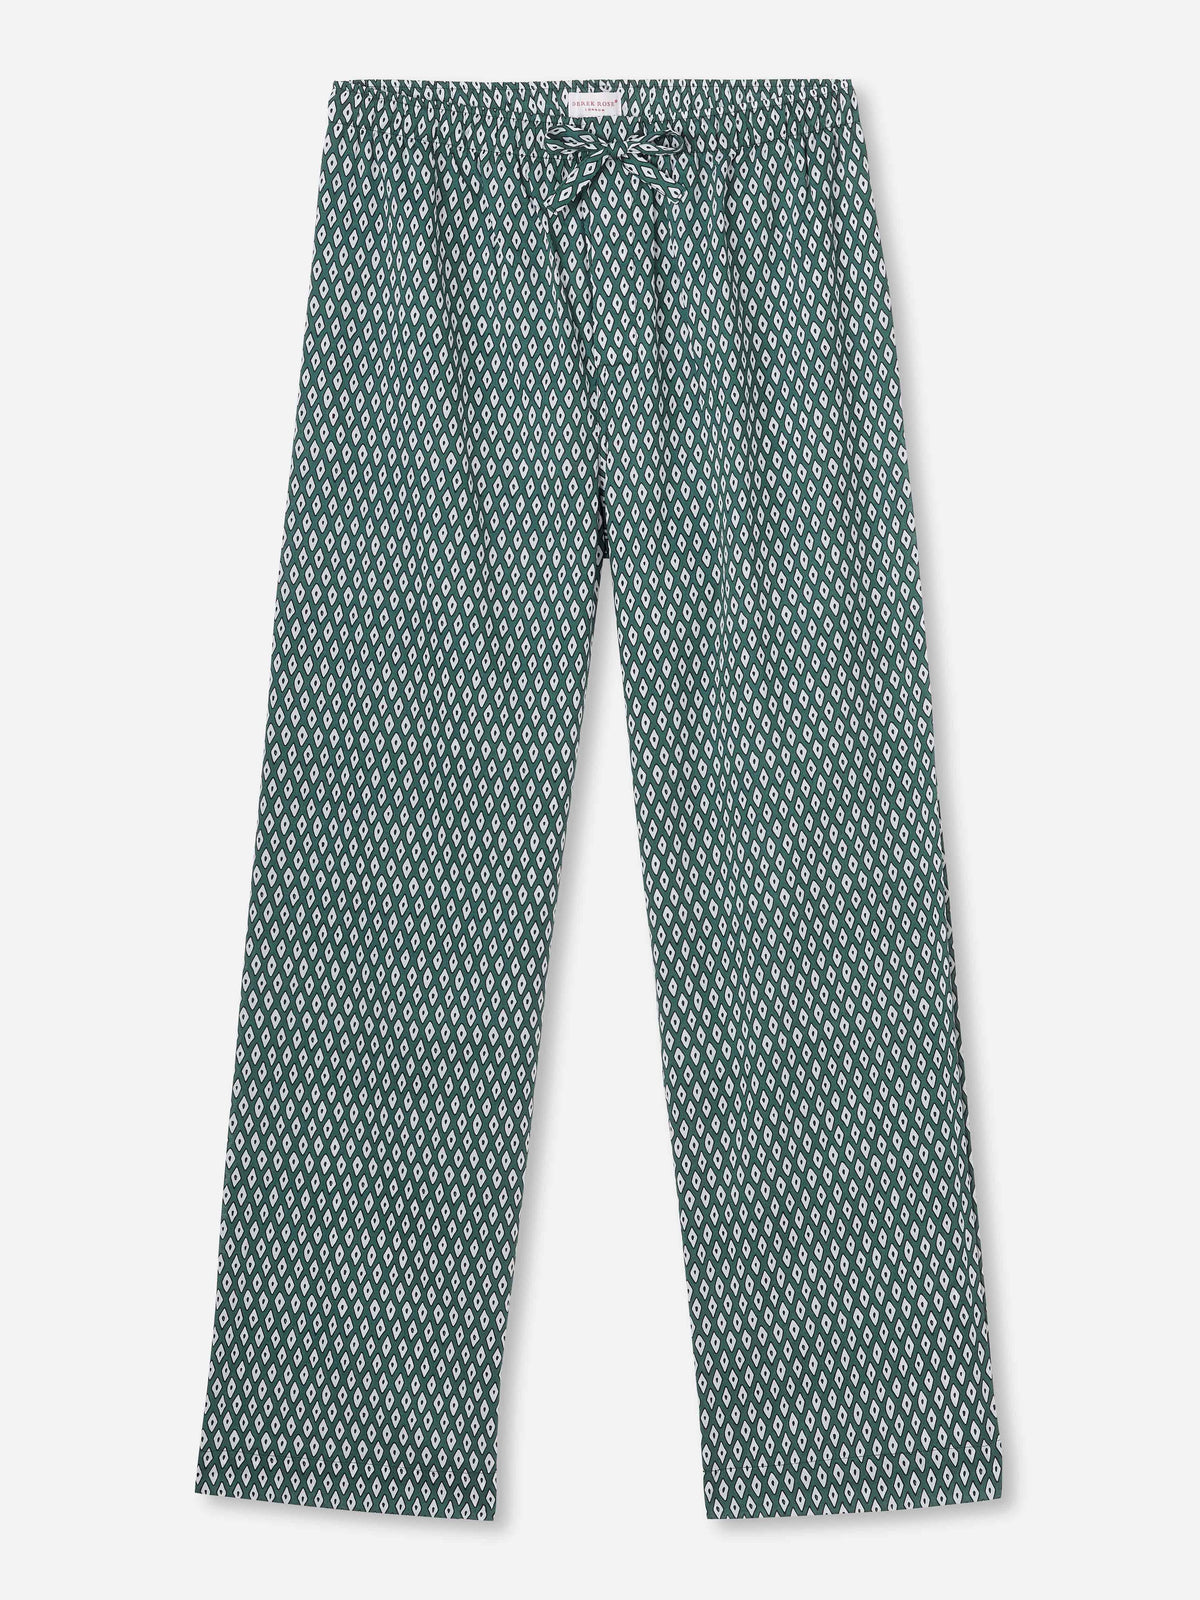 Men's Lounge Trousers Nelson 87 Cotton Batiste Green